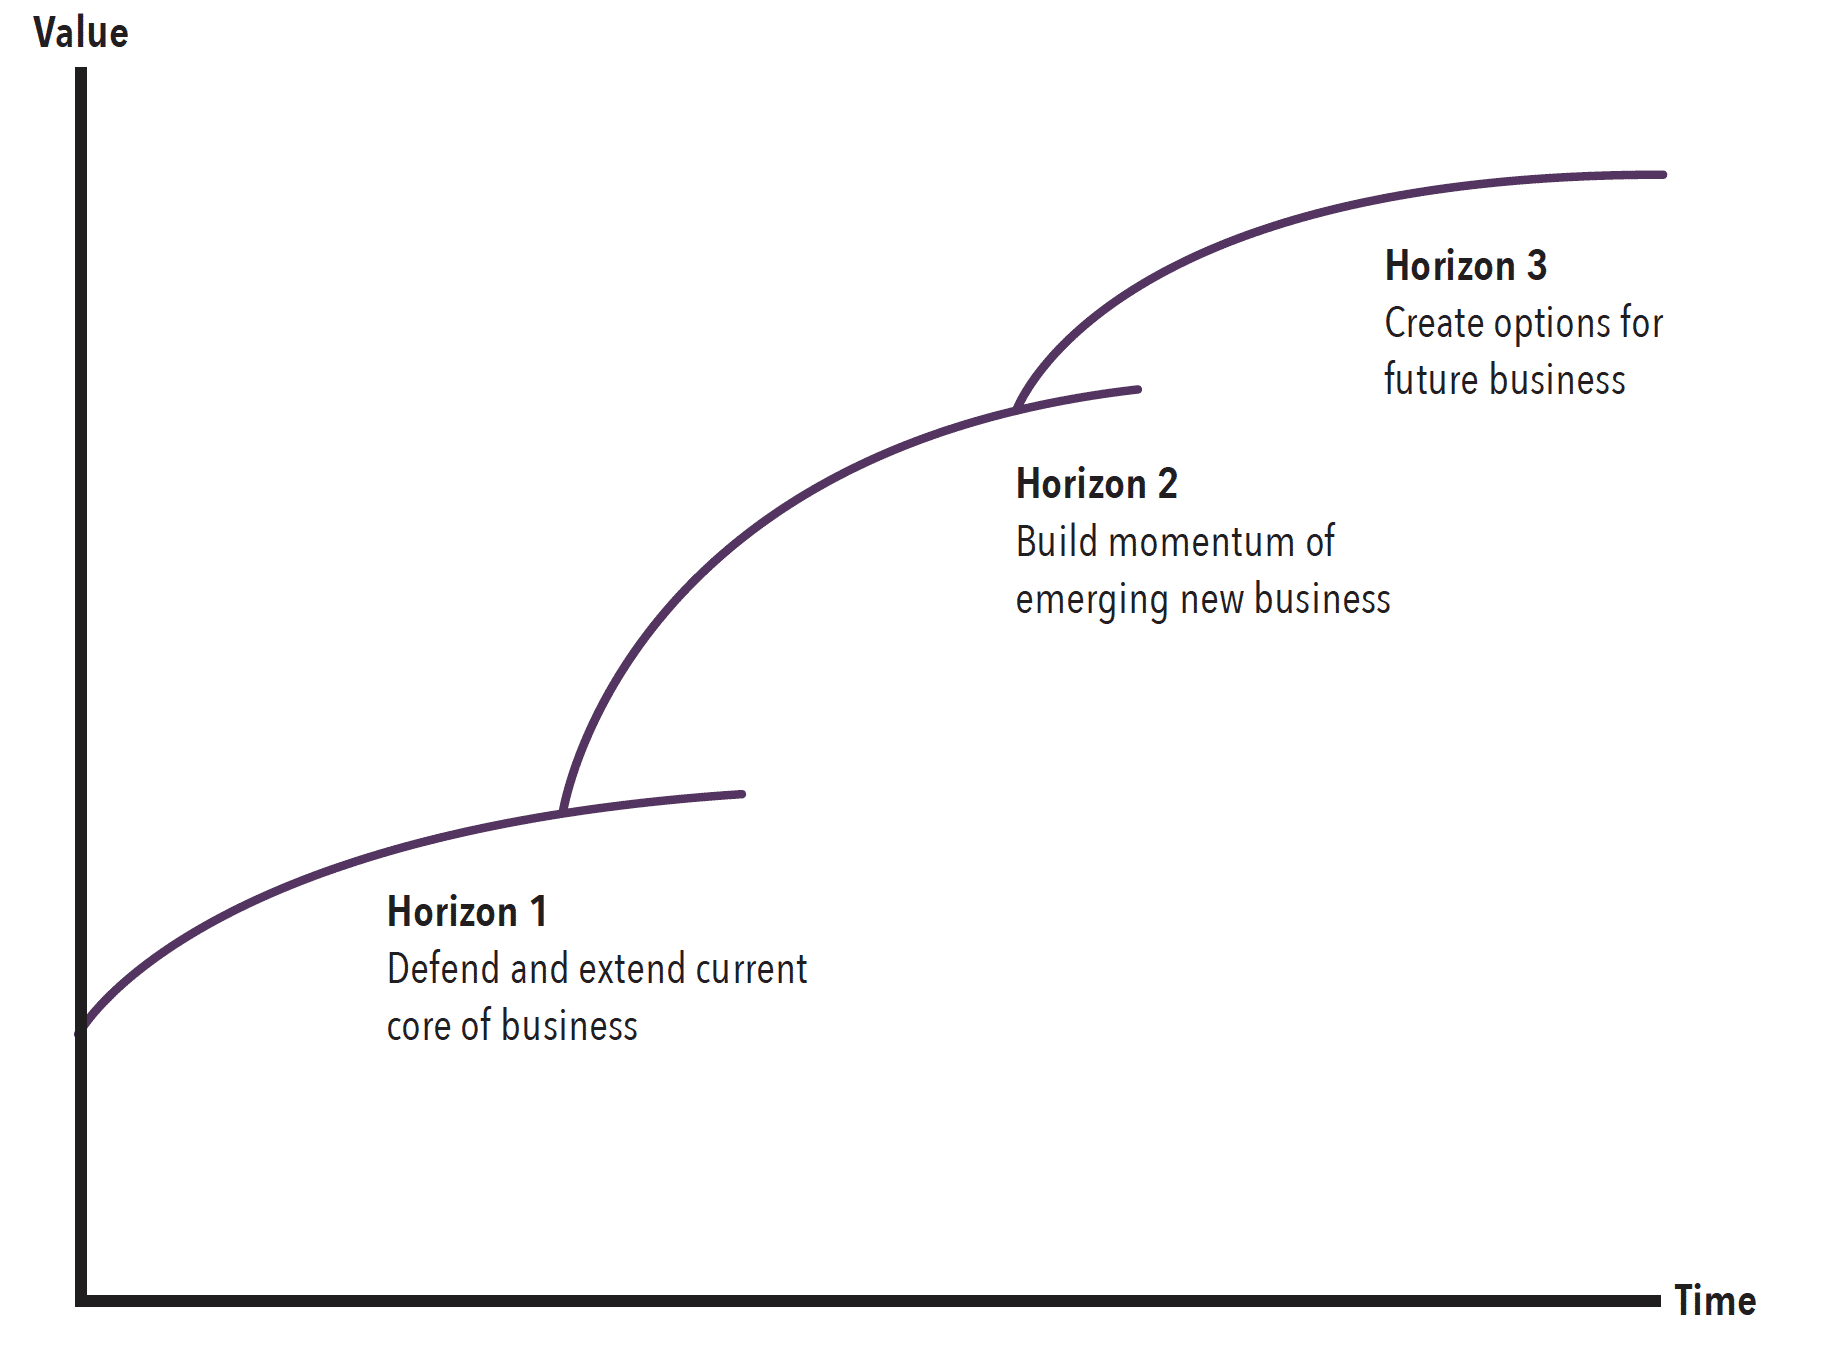 The Three Horizons model